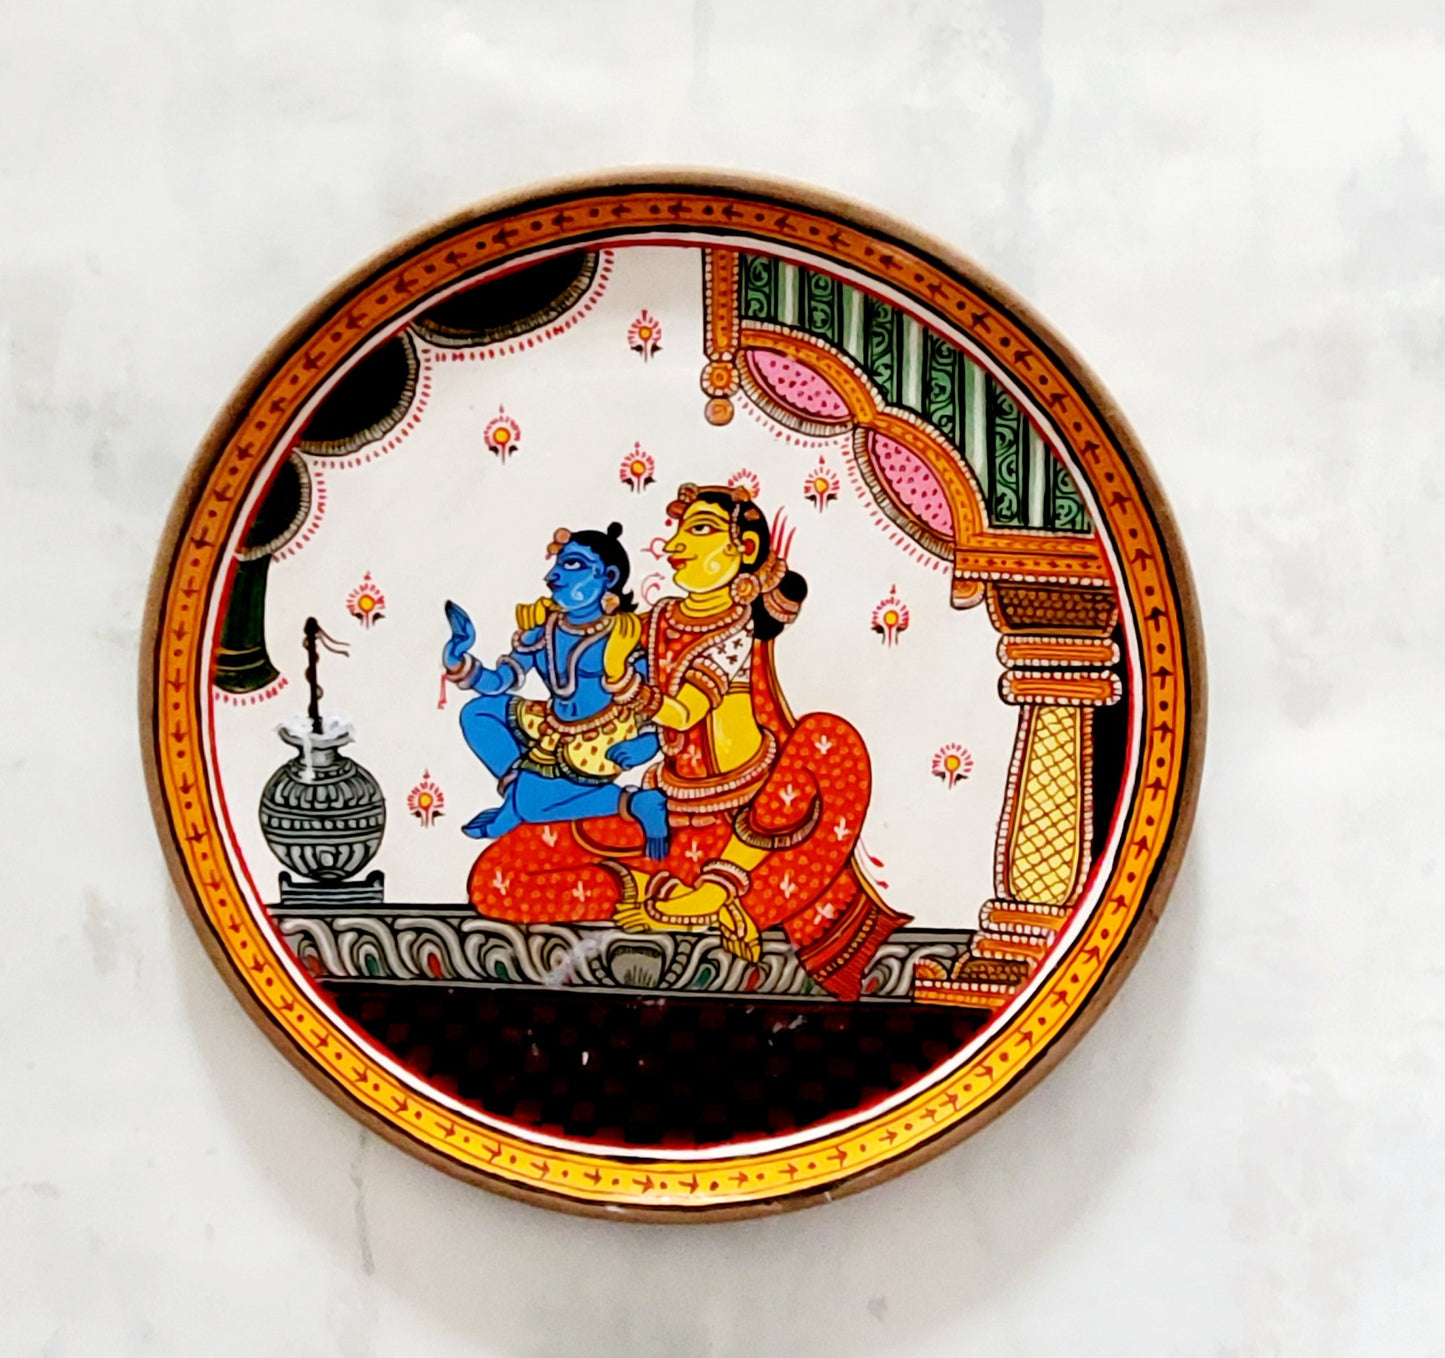 Yashoda Krishna Handpainted Indian traditional wall plate